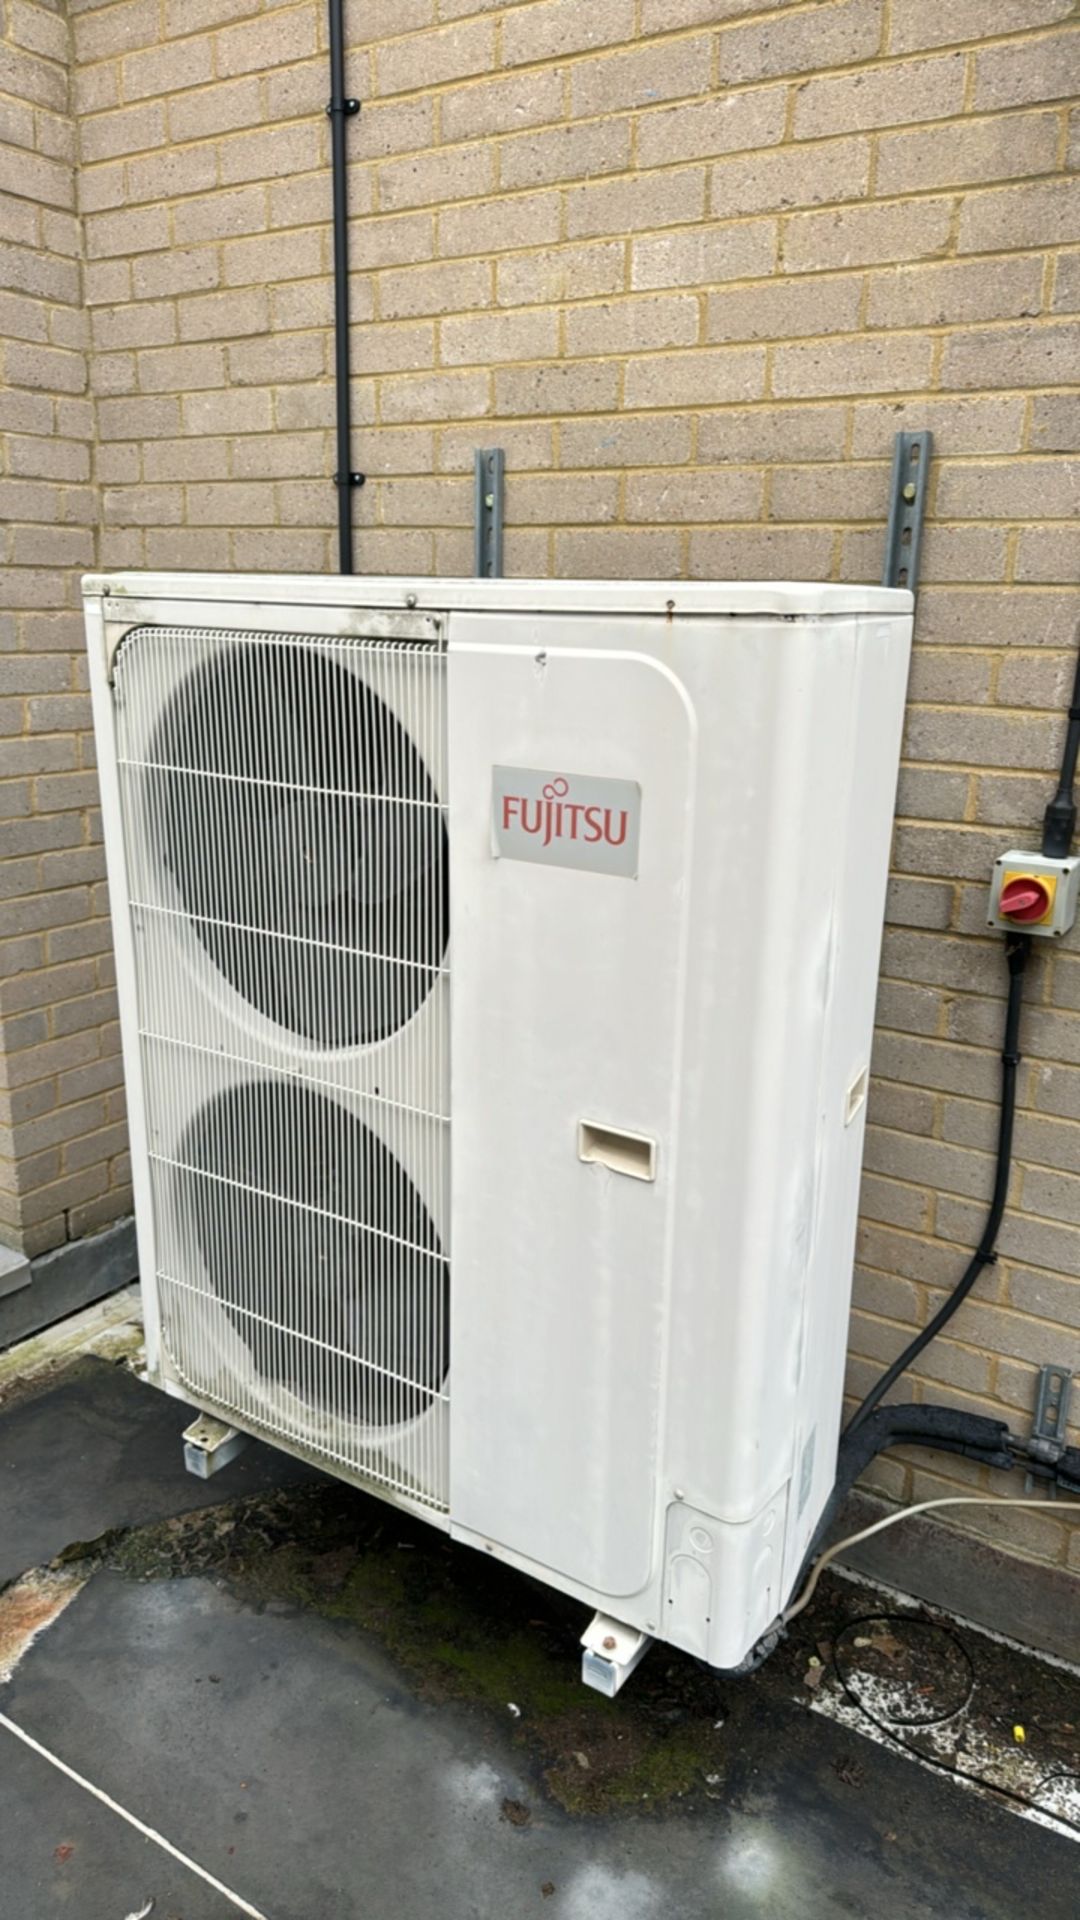 Fujitsu Outside Air Conditioner Unit - Image 2 of 4